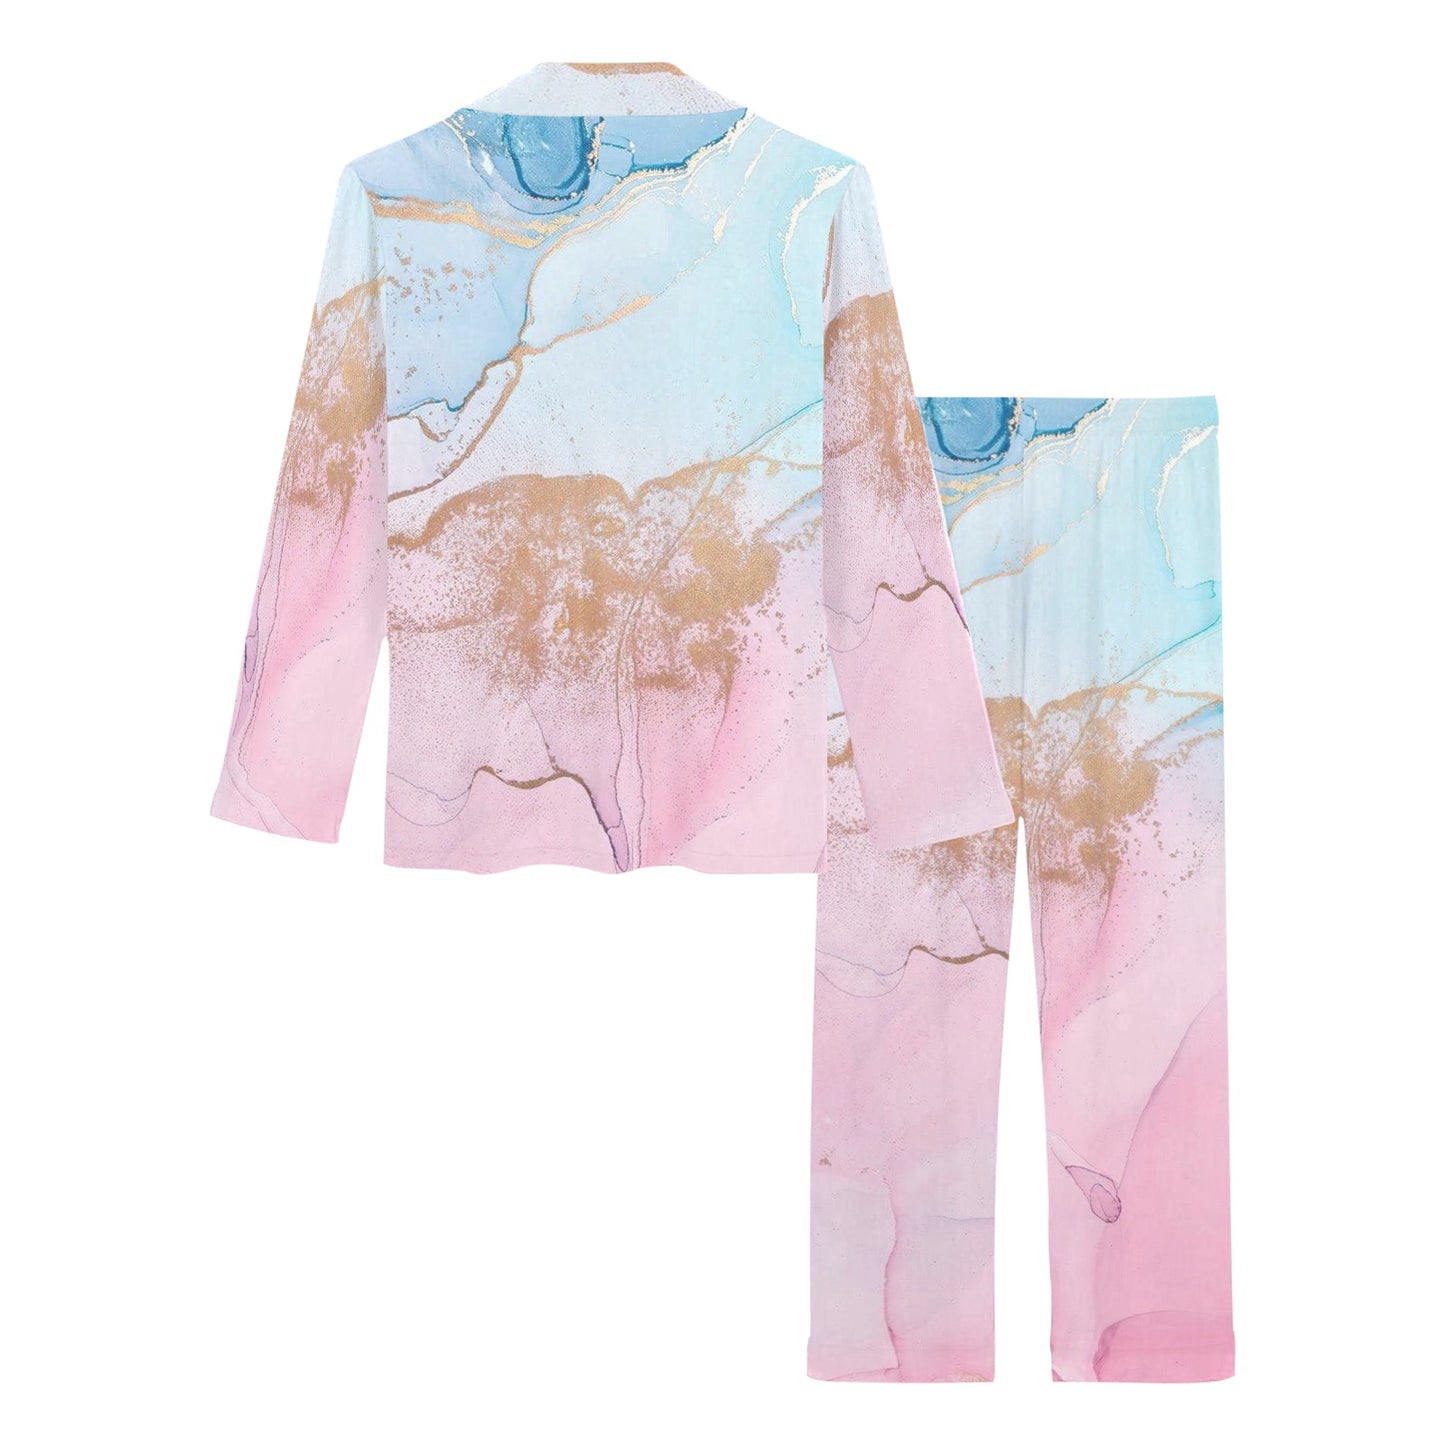 Pink and Blue Marble Print Women's Long Pyjamas